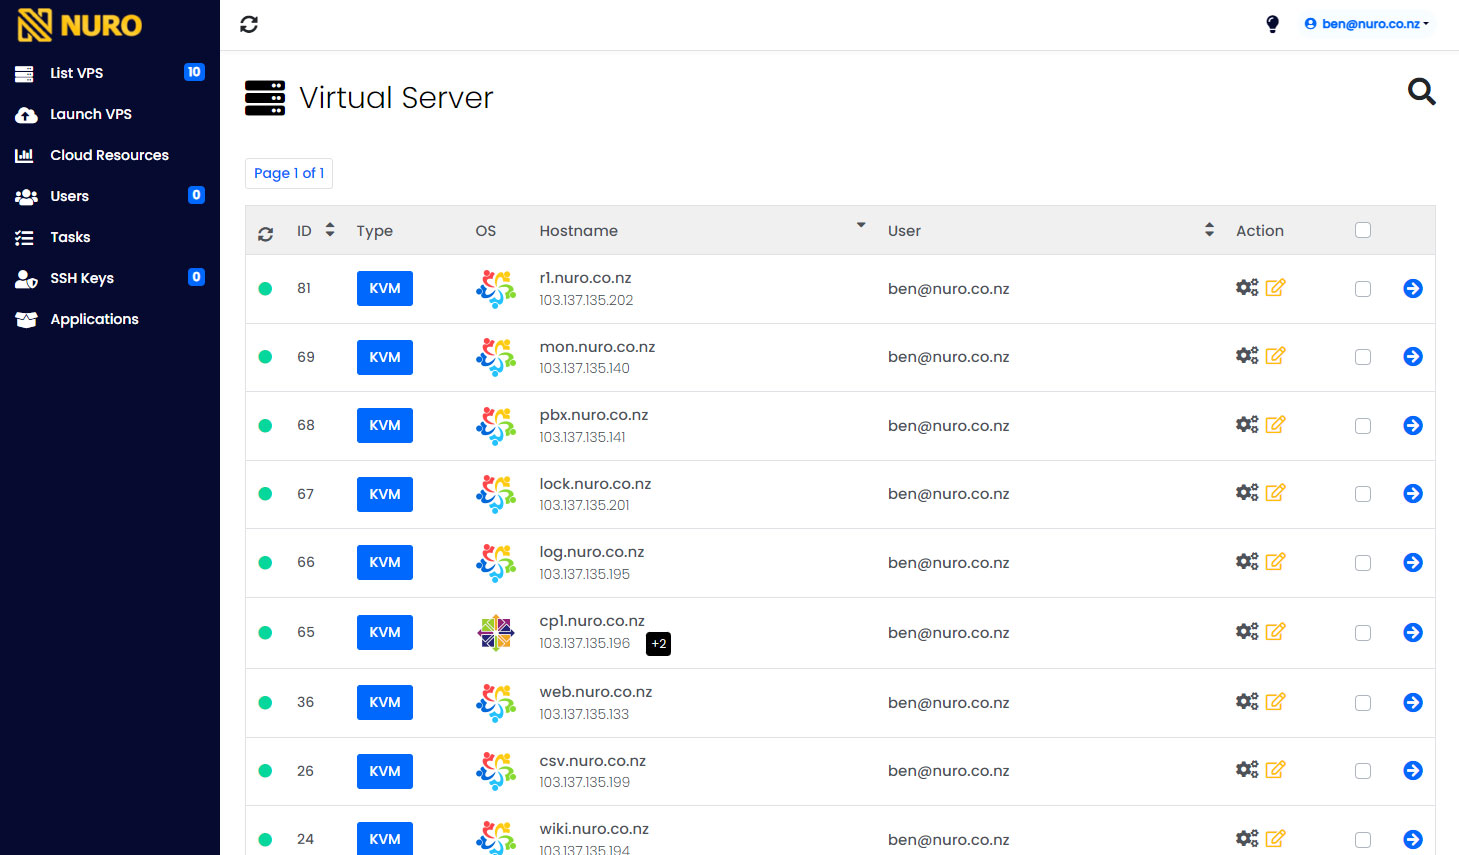 List all VPS Servers